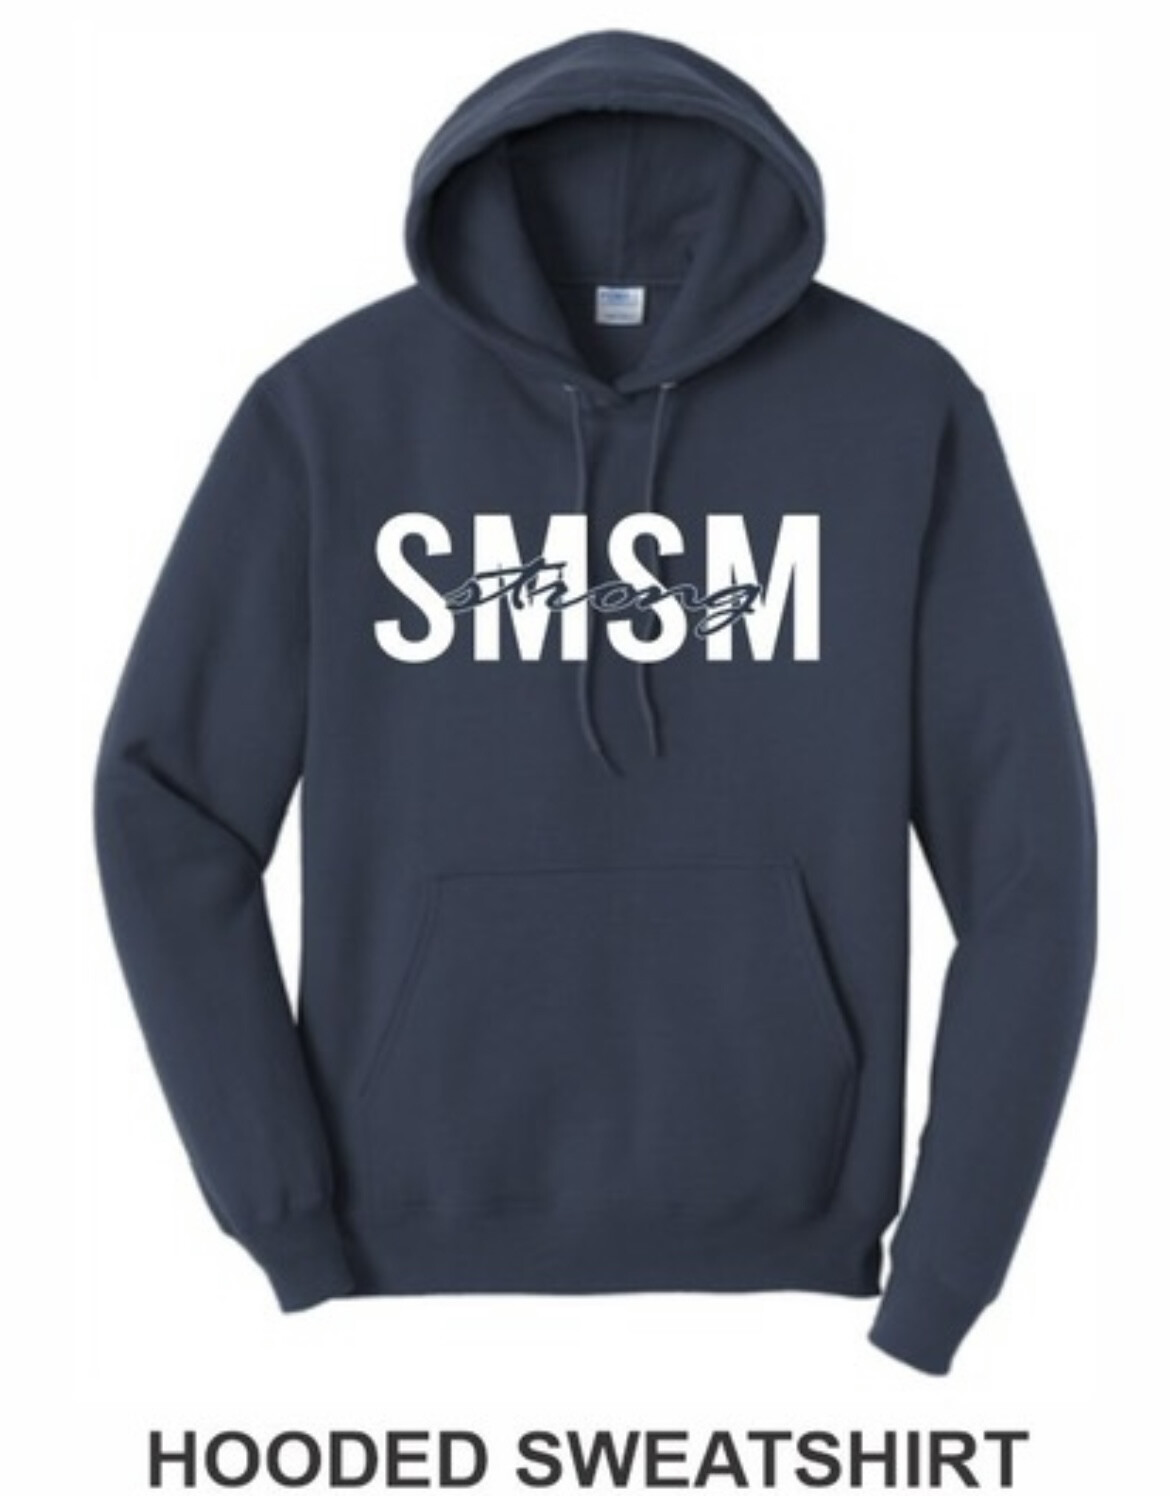 SMSM Strong Hooded Sweatshirt